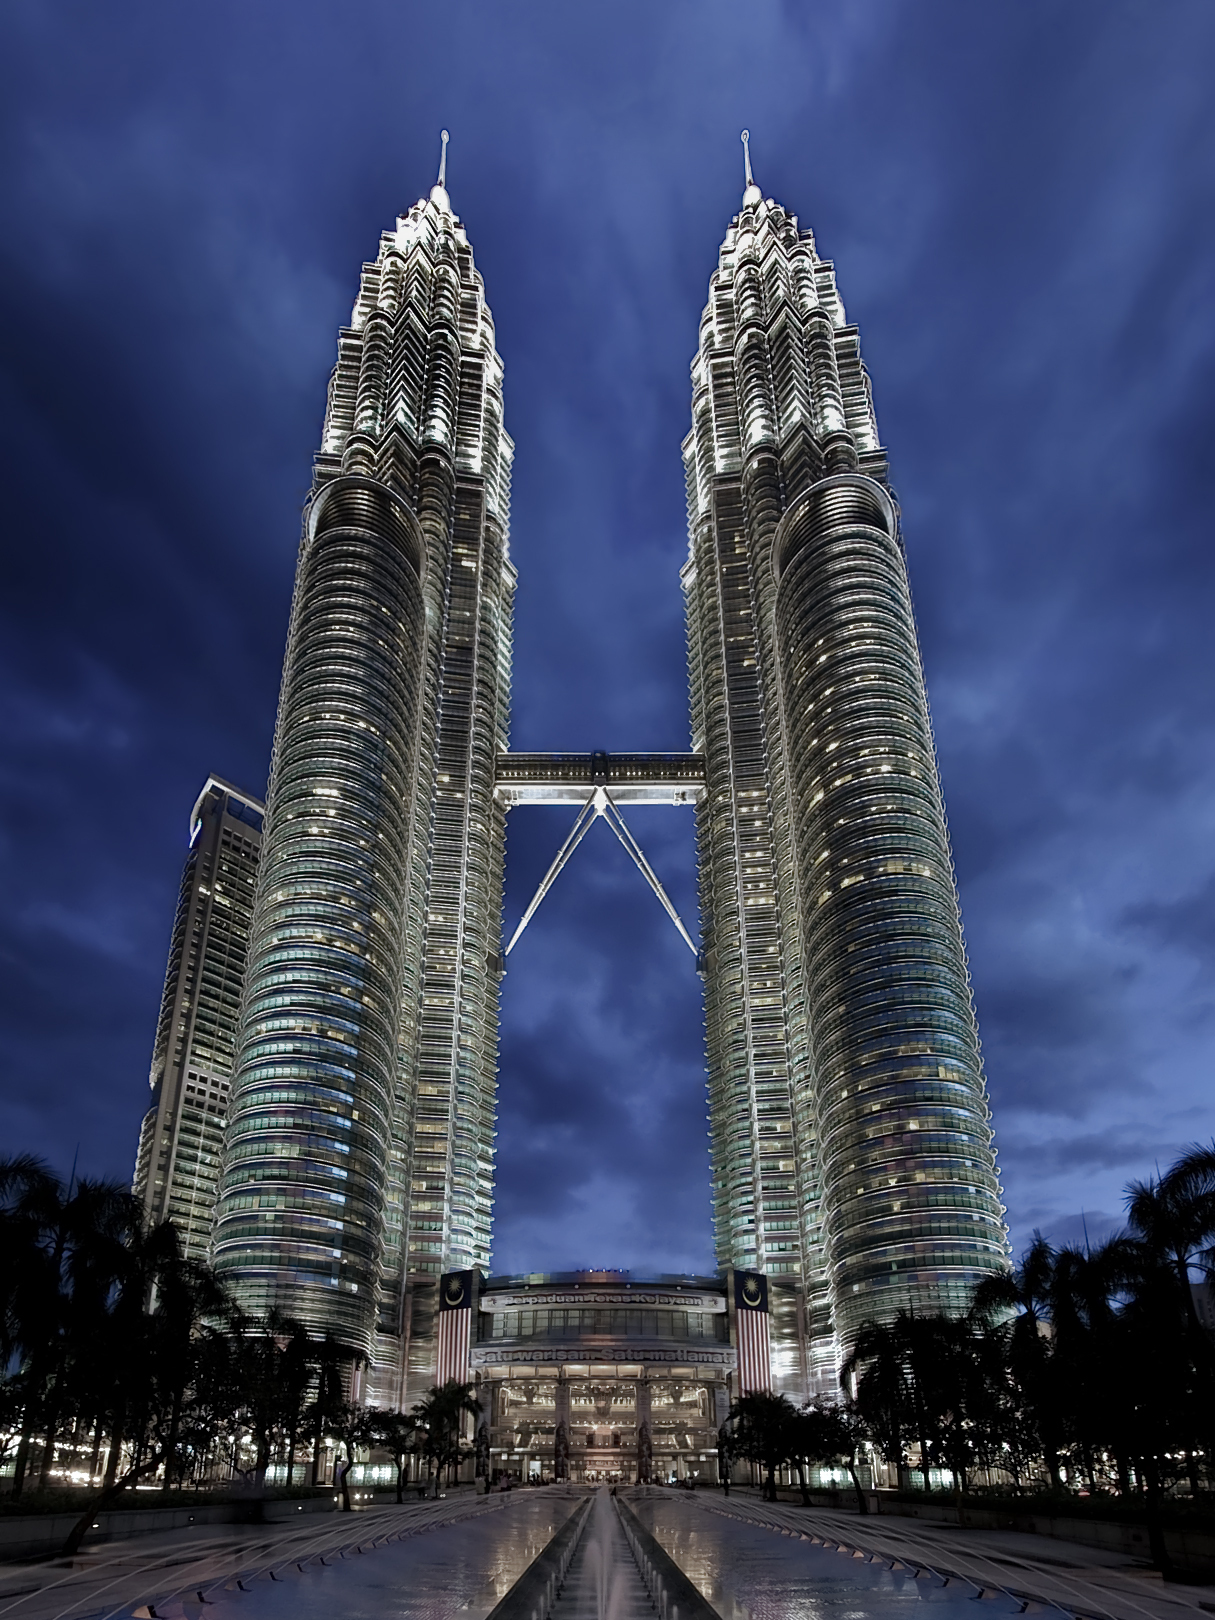 Panorama Tower - Wikipedia